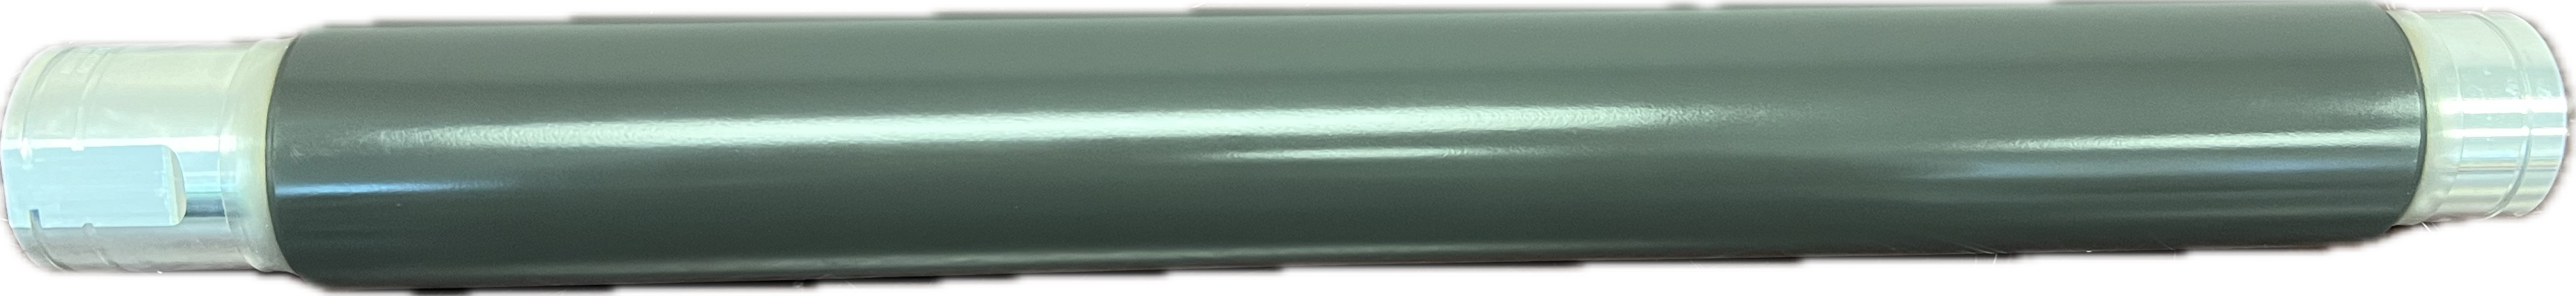 Genuine Ricoh Upper Fuser Roller | AE01-1117